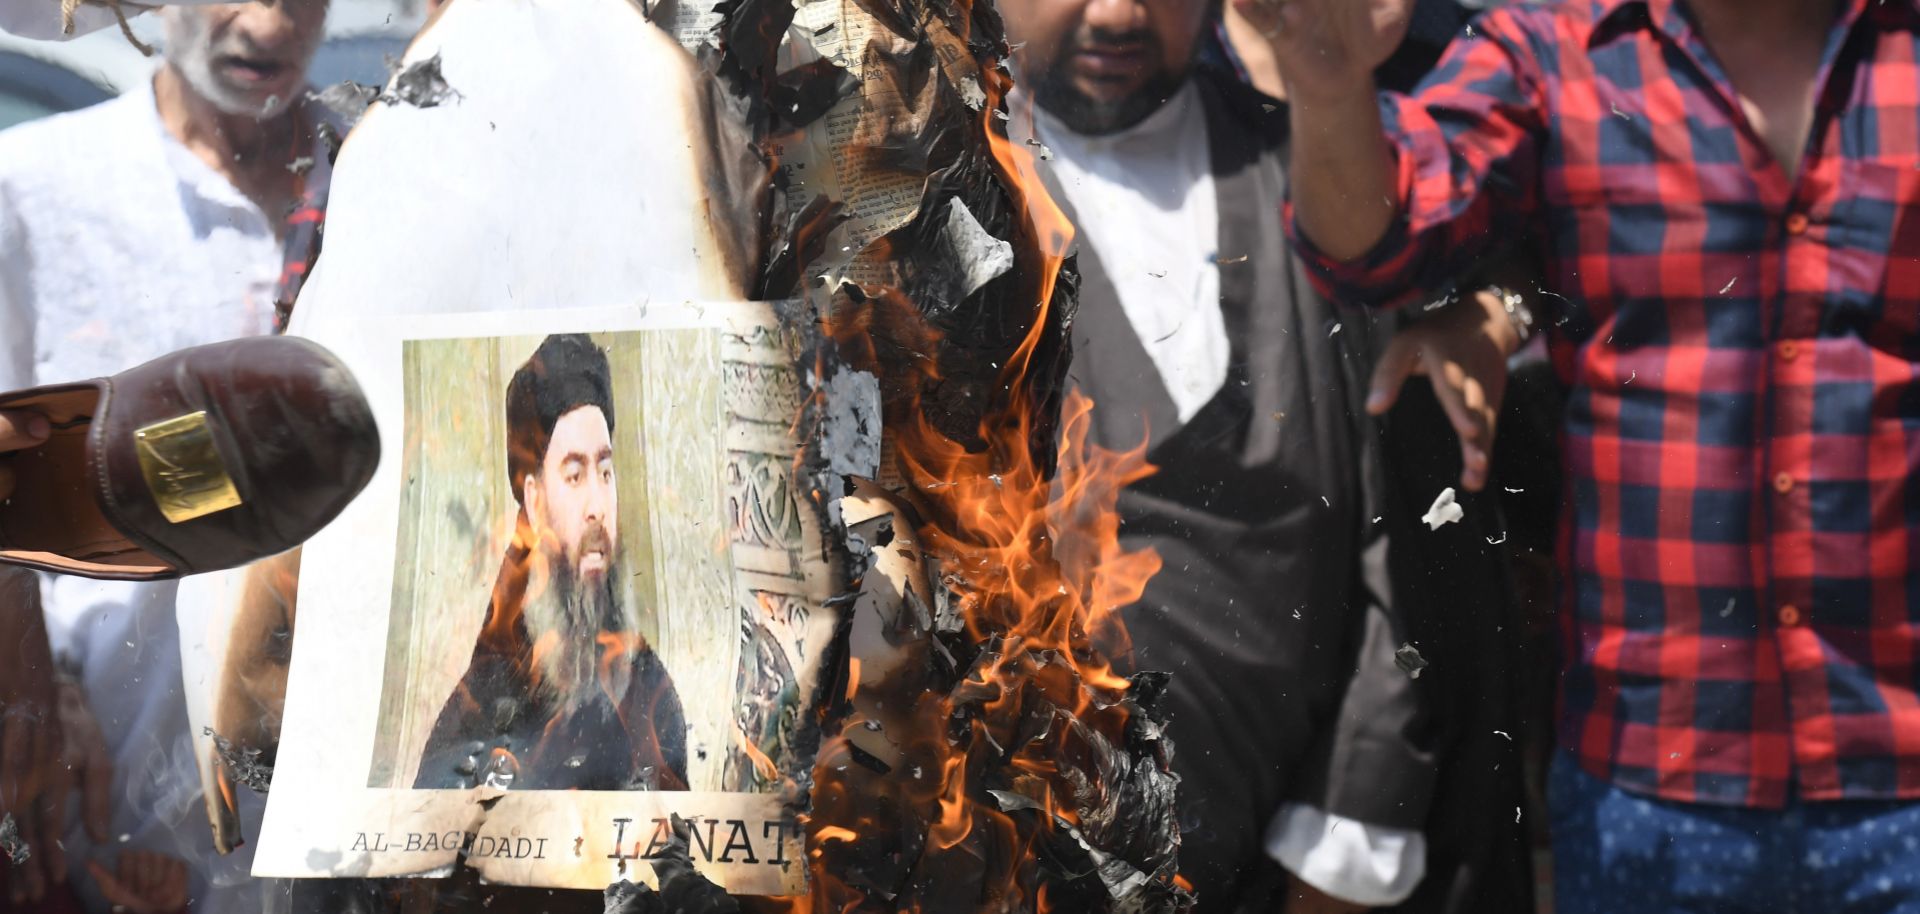 Protesters burn a picture of Islamic State leader Abu Bakr al-Baghdadi on June 9, 2017, in New Delhi.